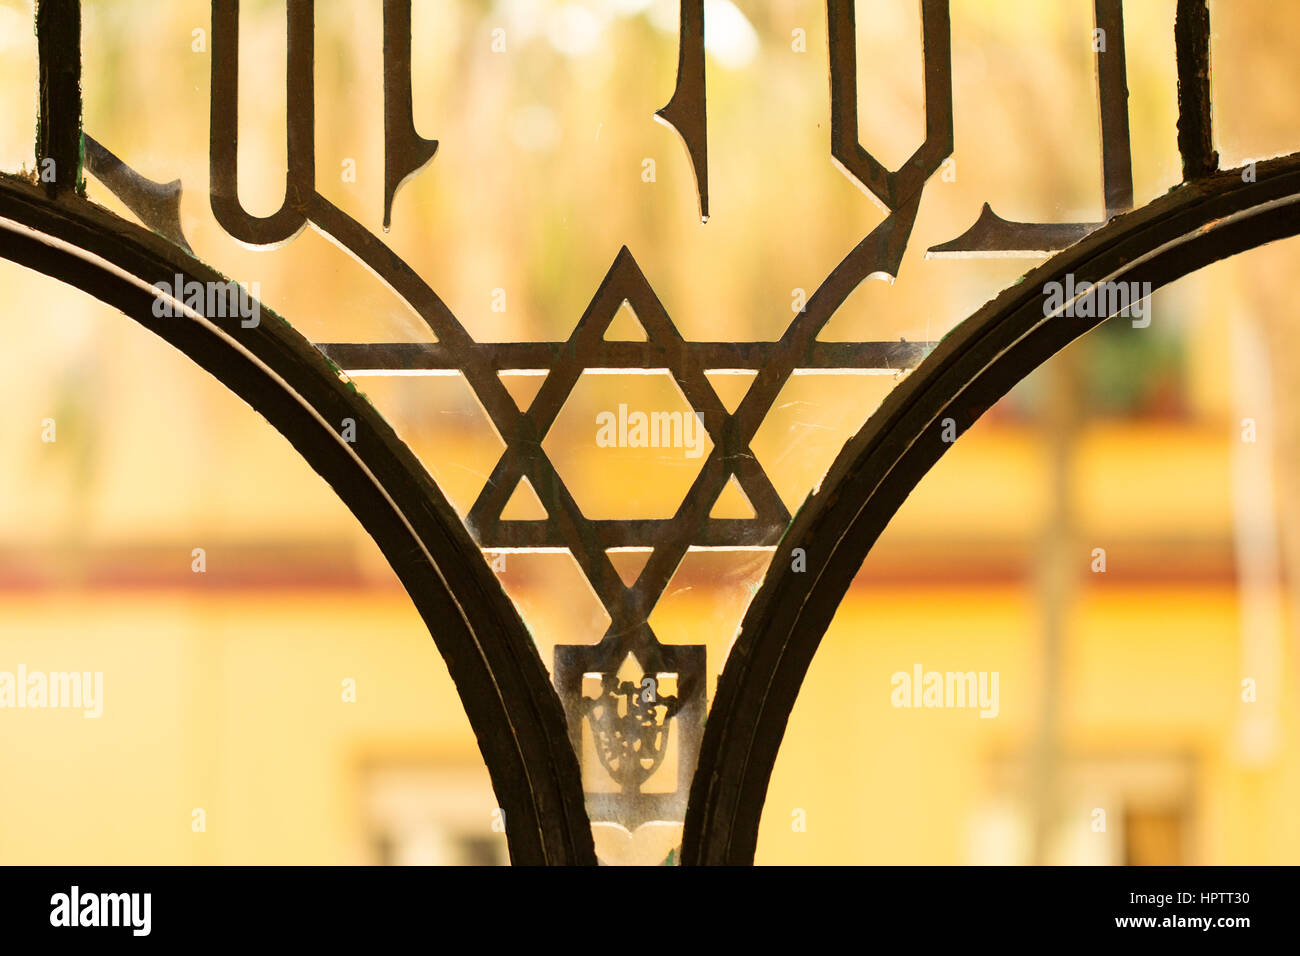 jewish star symbol in architecture Stock Photo